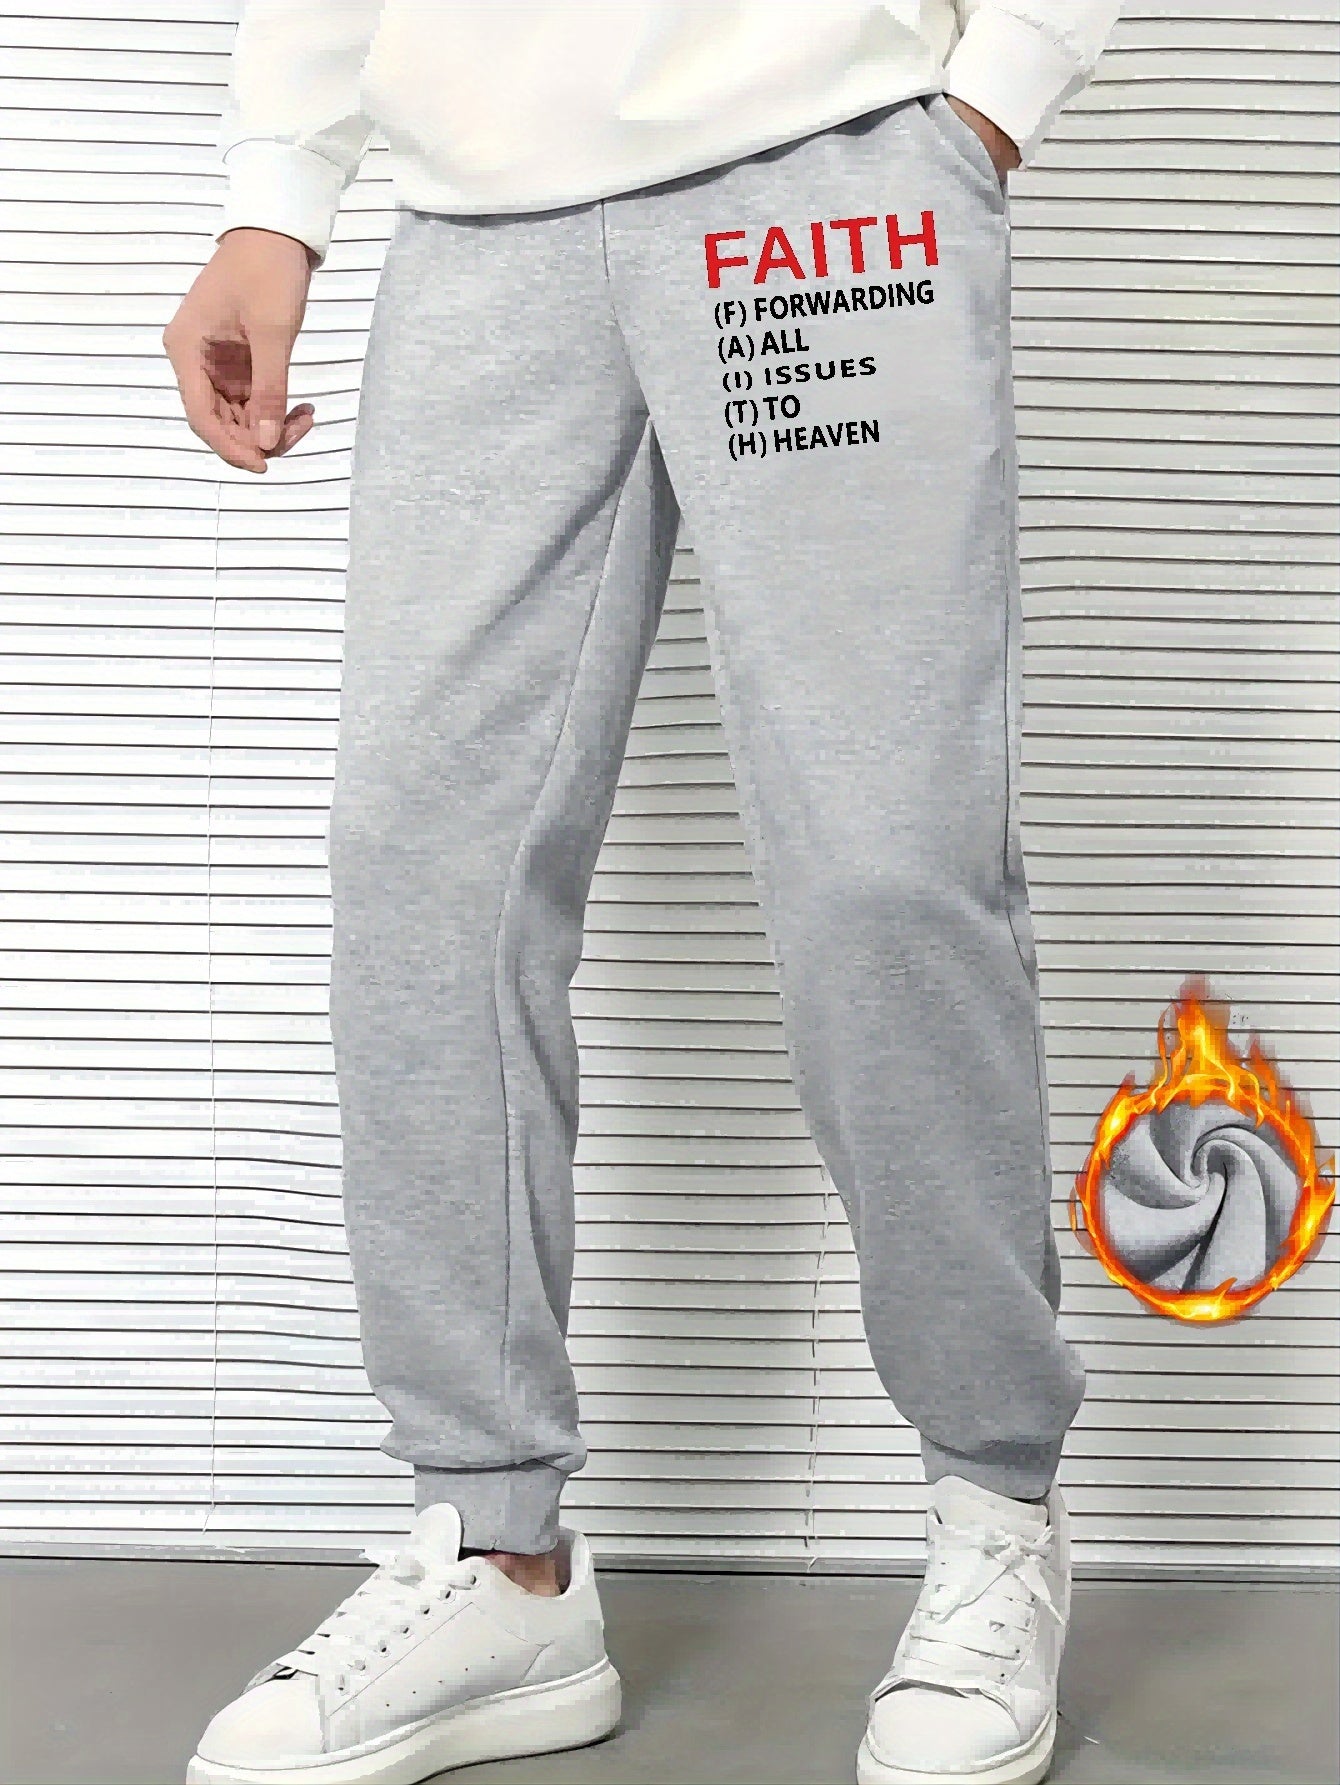 FAITH: Forwarding All Issues To Heaven Men's Christian Sweatpants claimedbygoddesigns